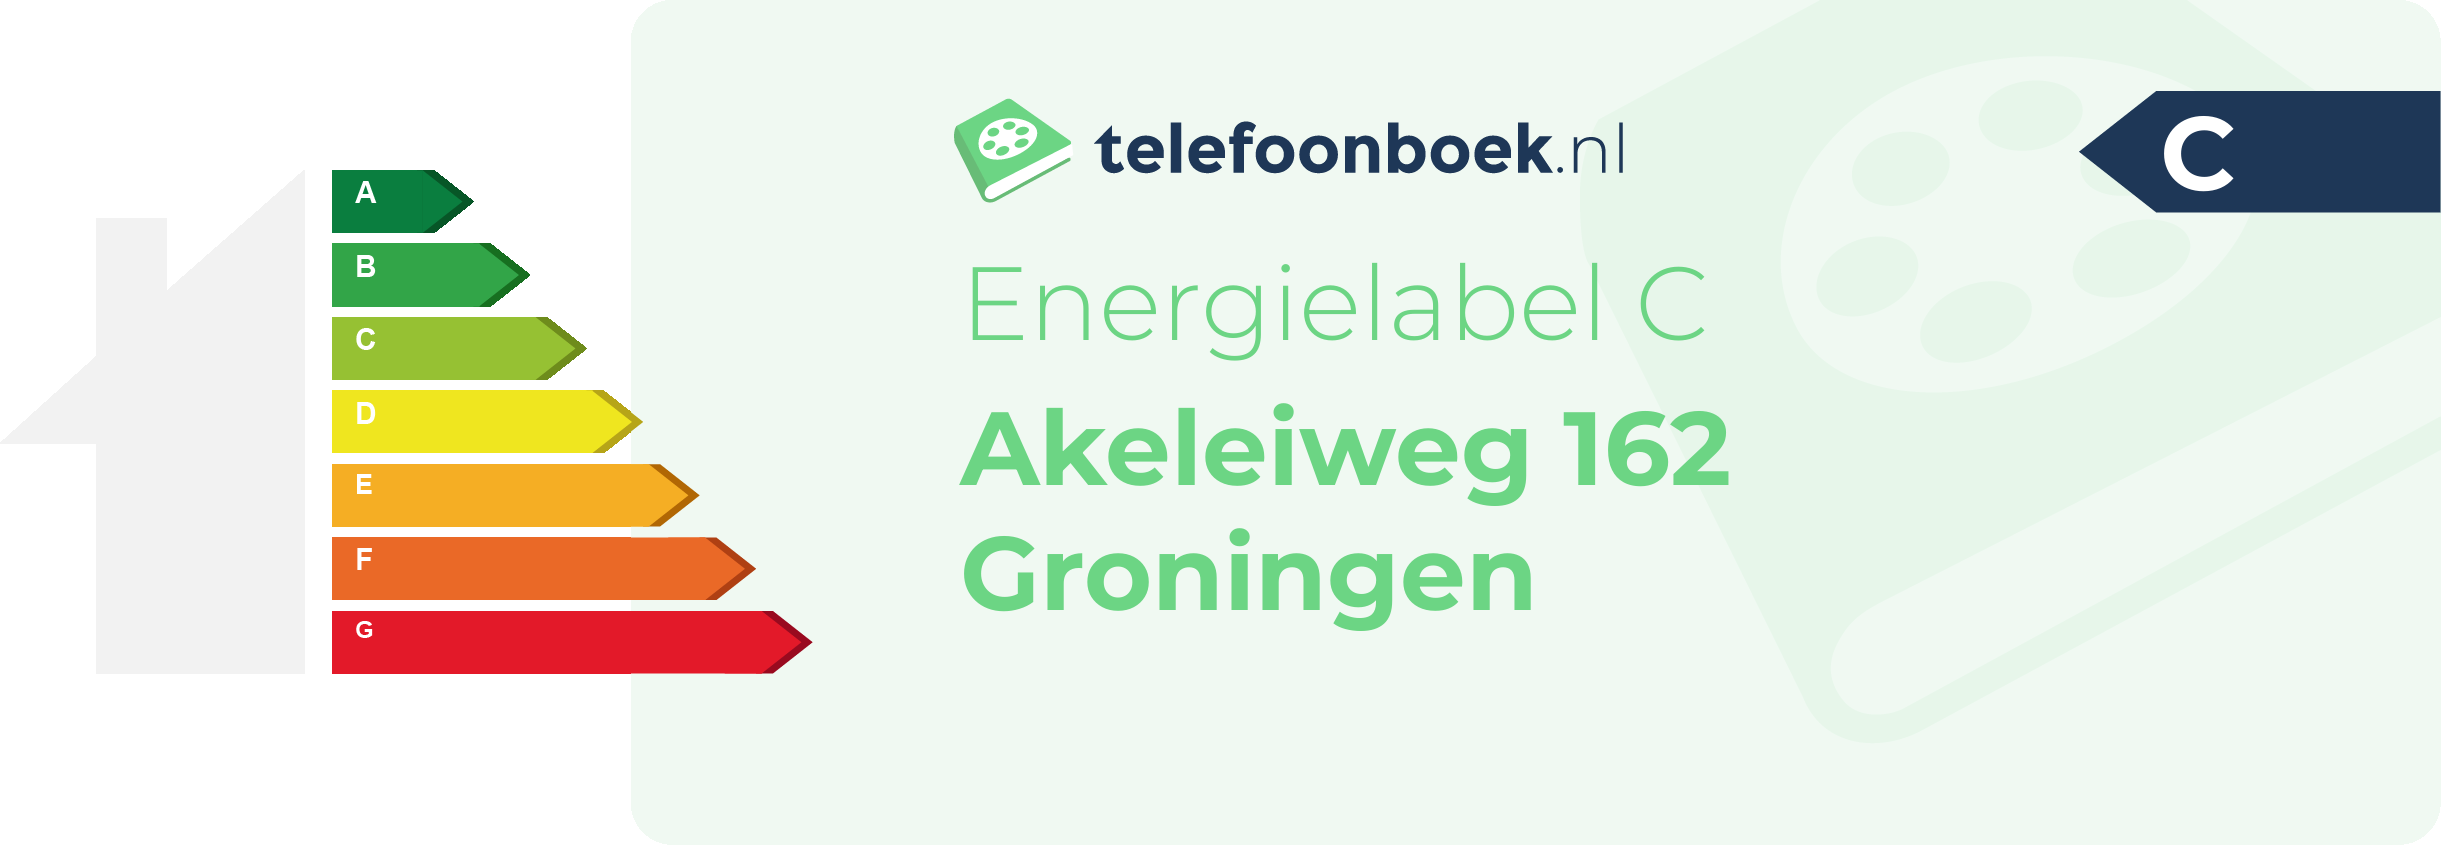 Energielabel Akeleiweg 162 Groningen